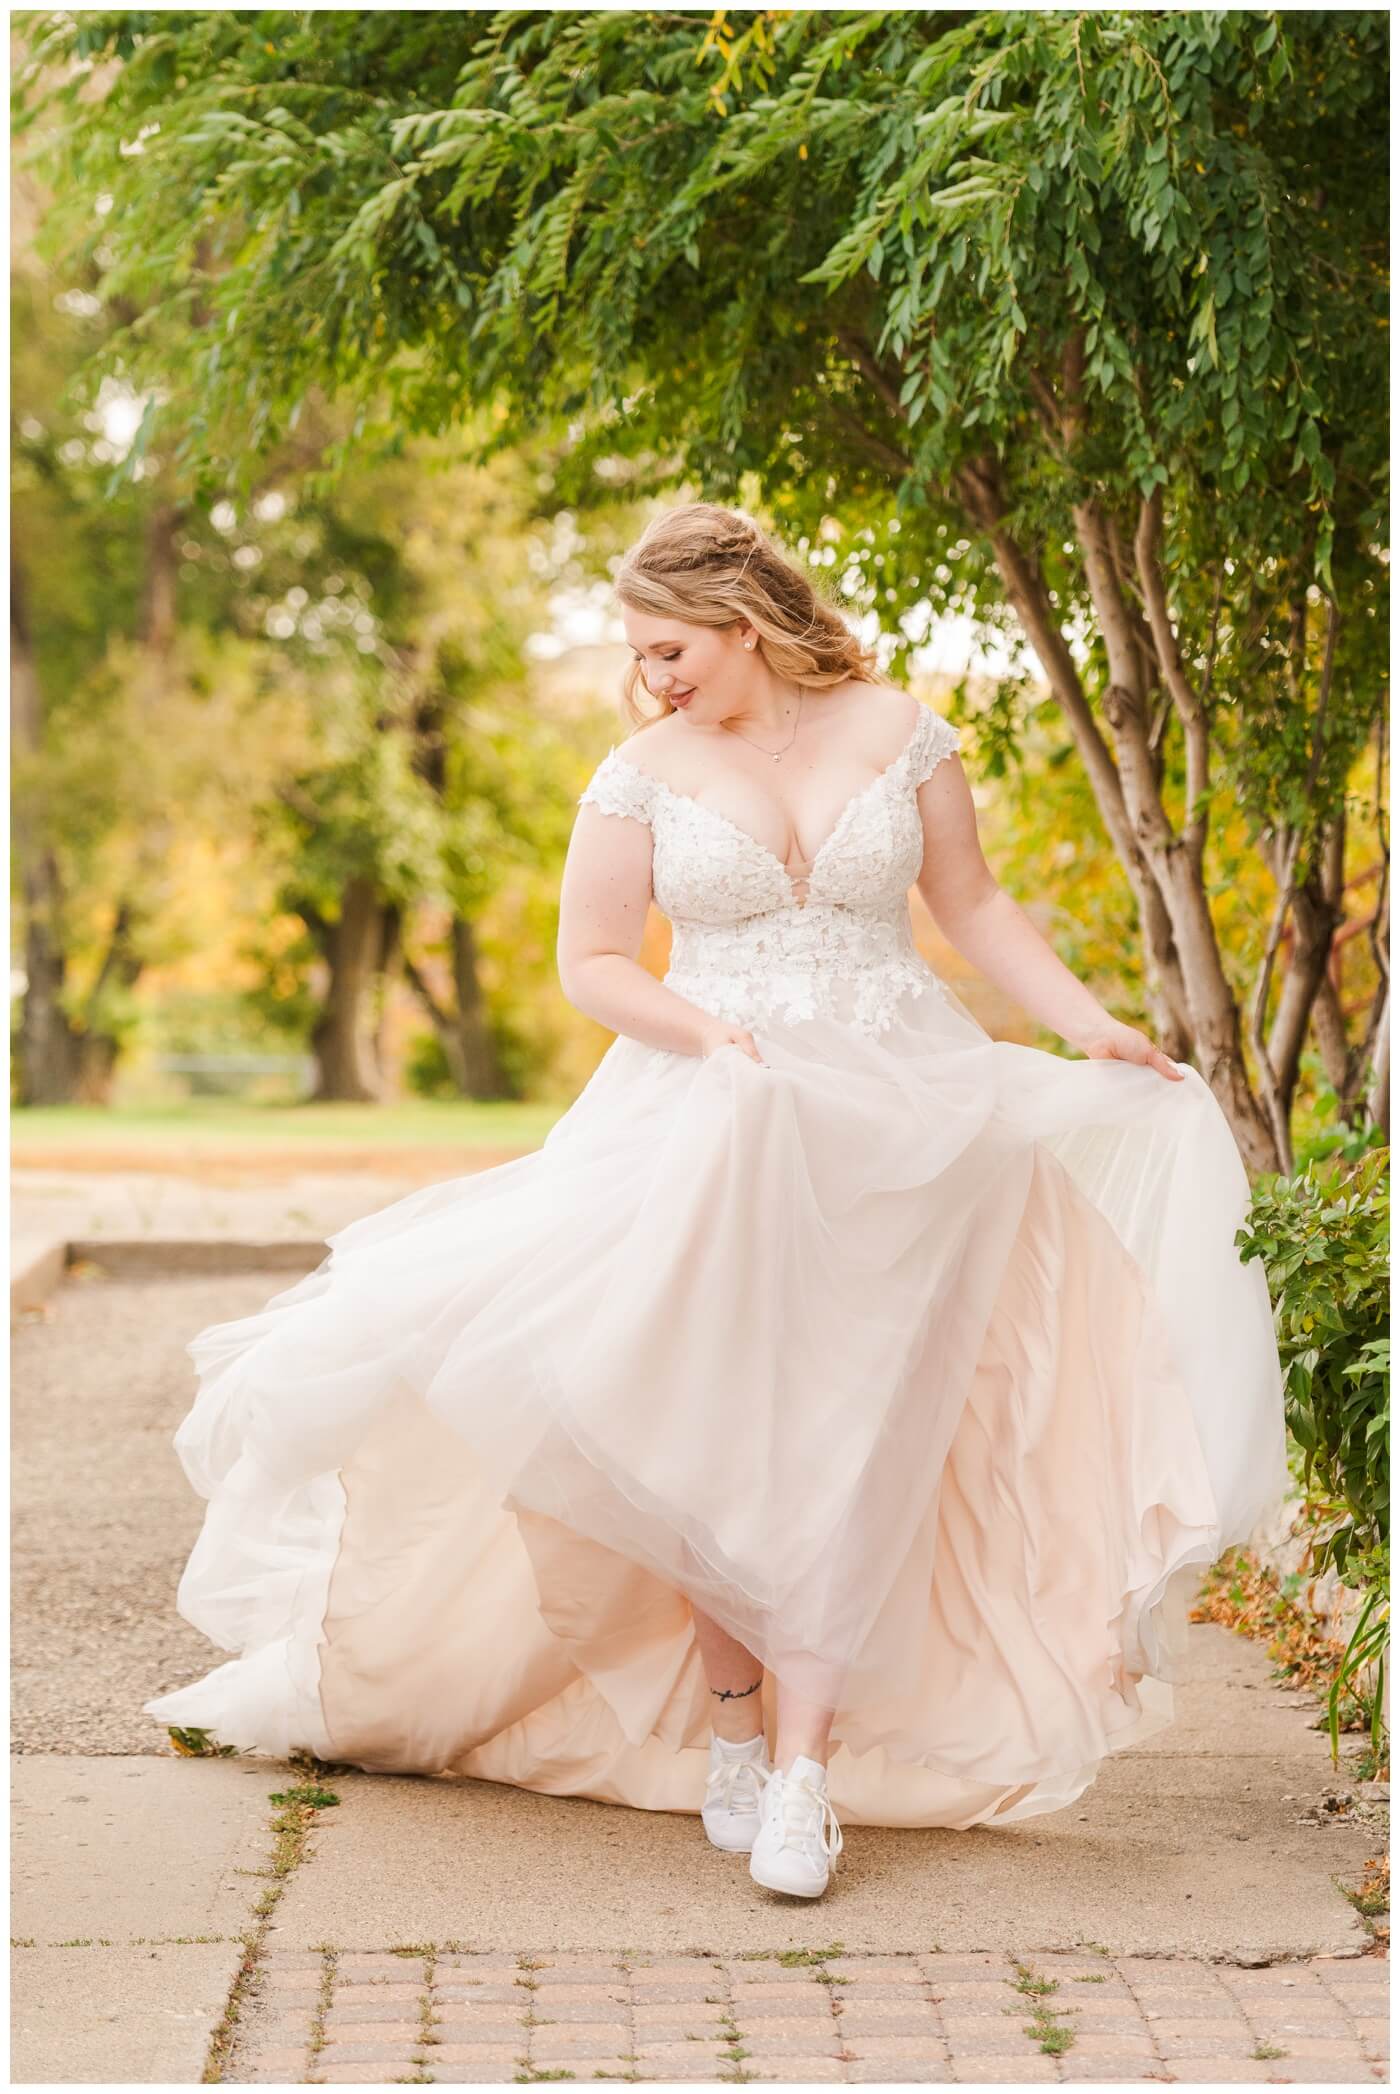 Orrin & Jade - 23 - Weyburn Wedding - Bride looks like a princess as she walks under a tree